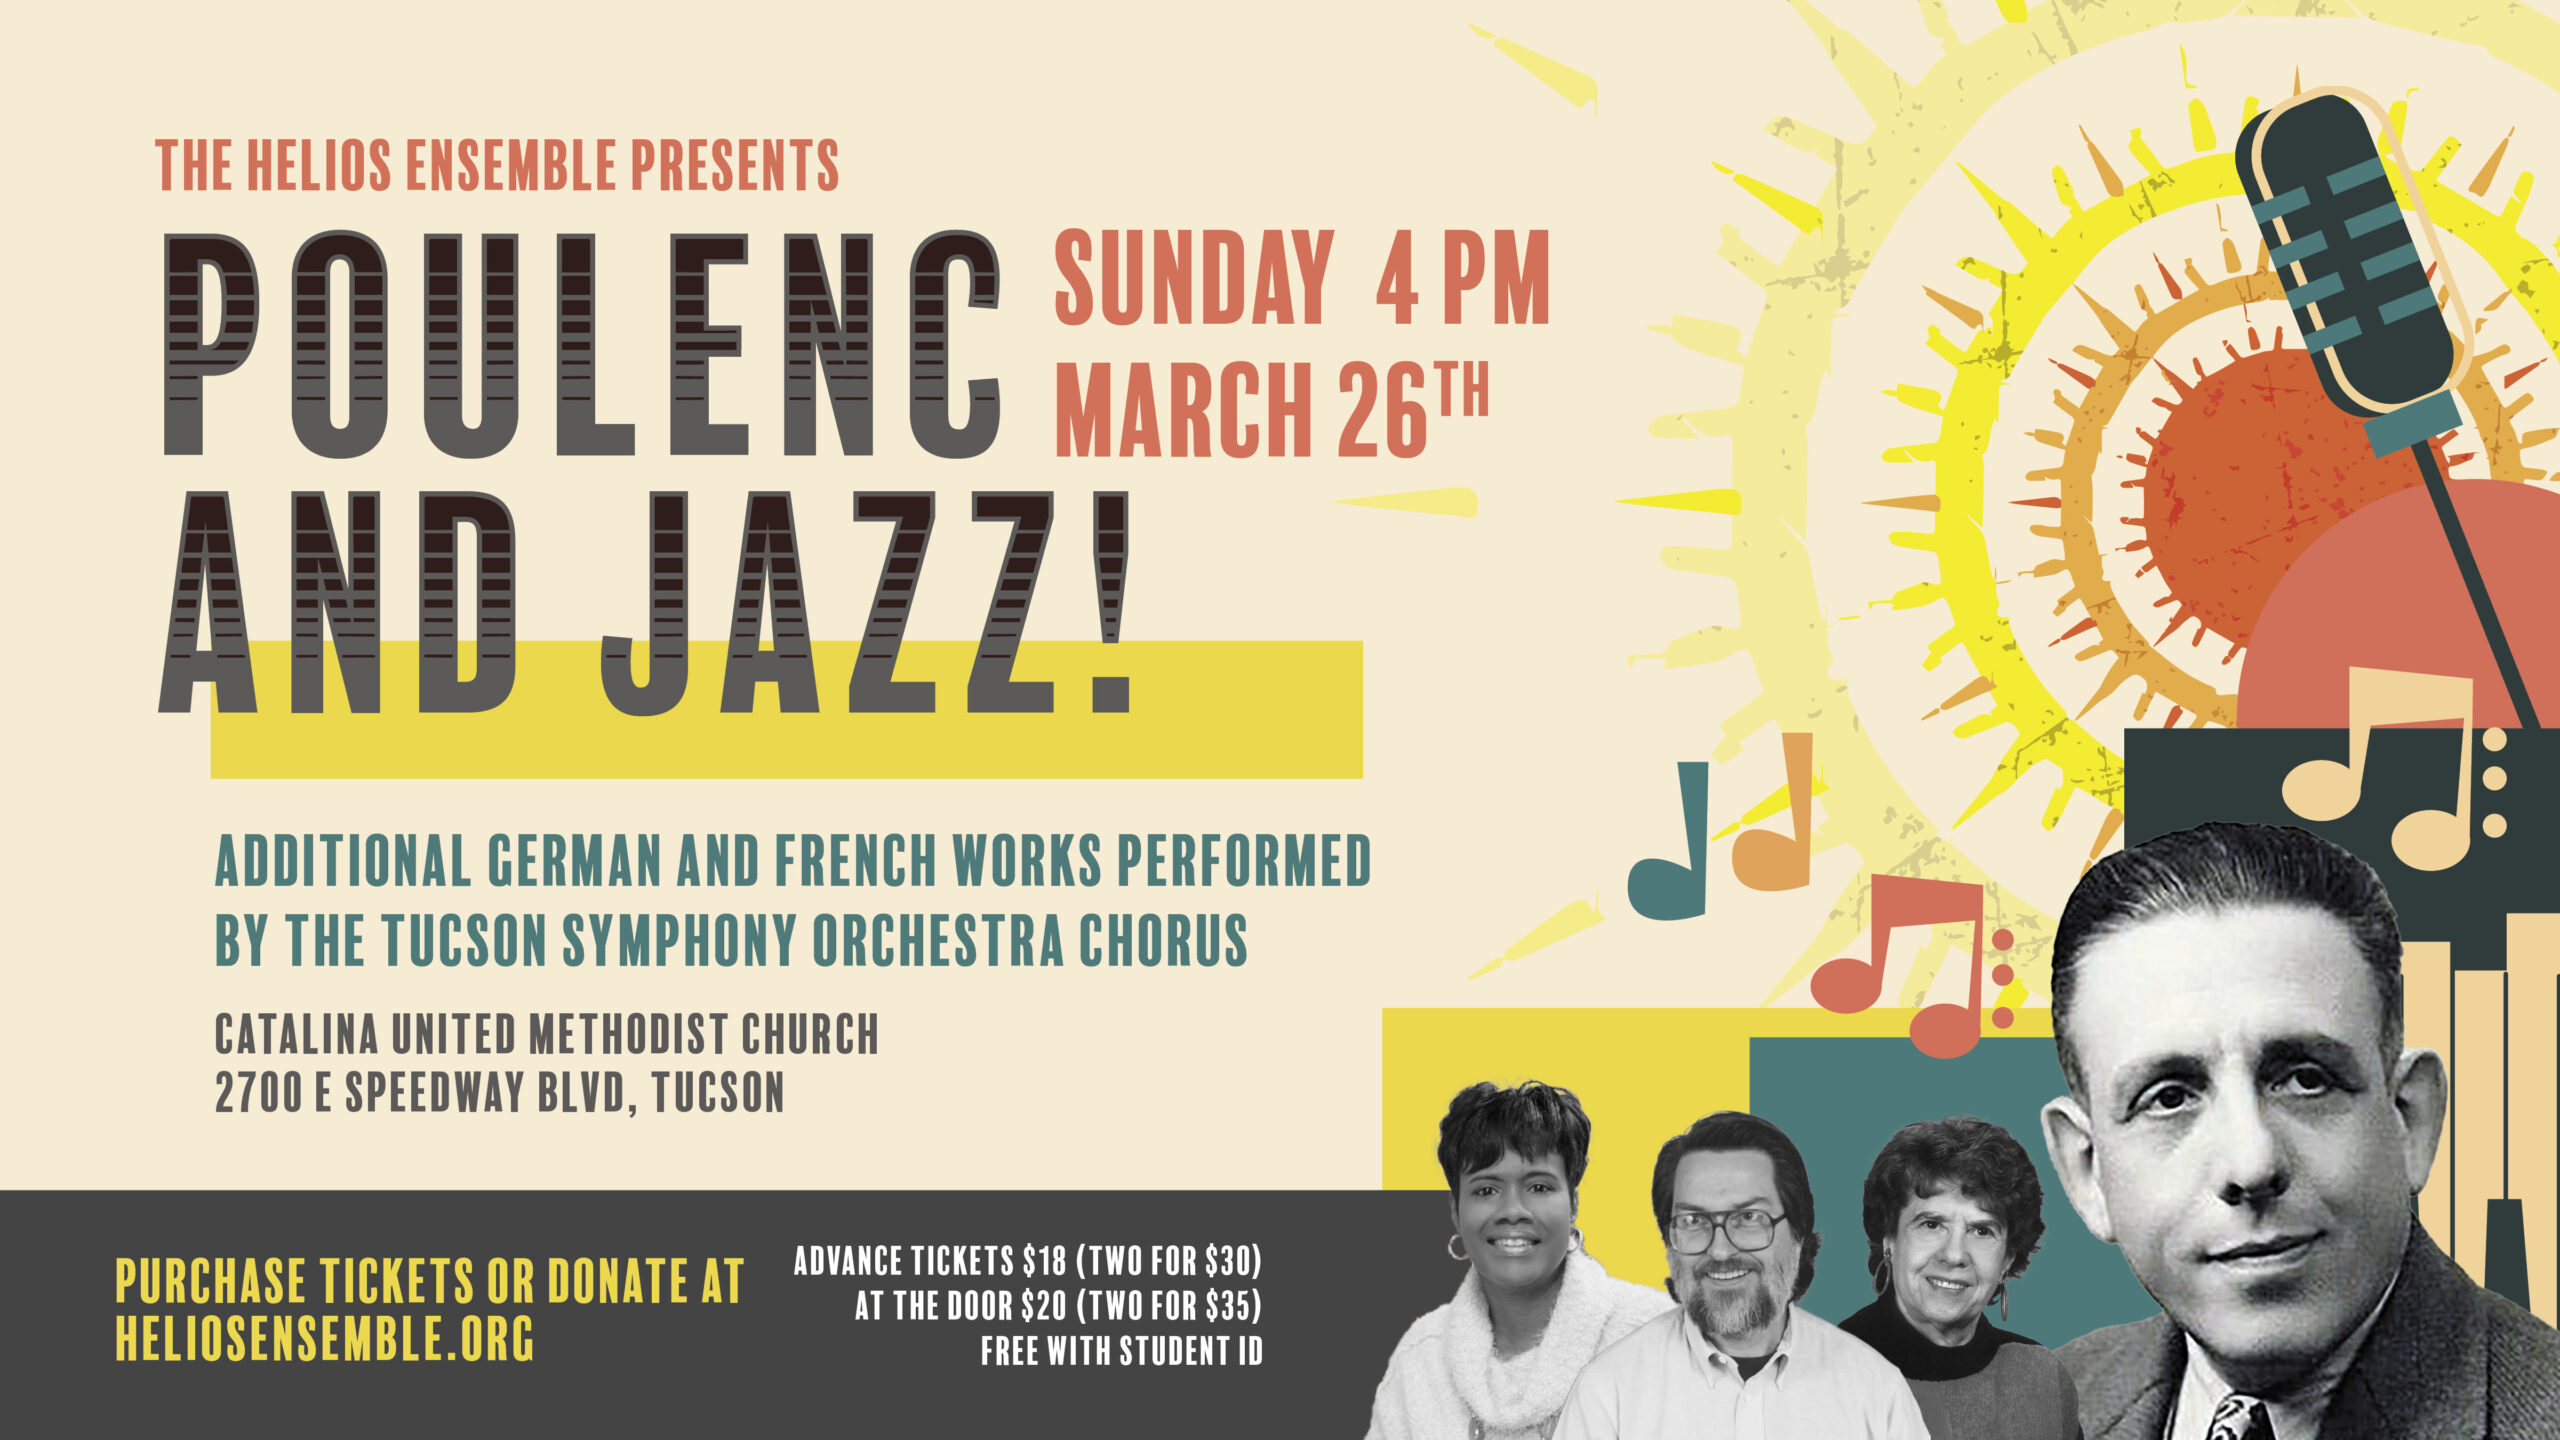 Helios Ensemble presents Poulenc and Jazz! March 26